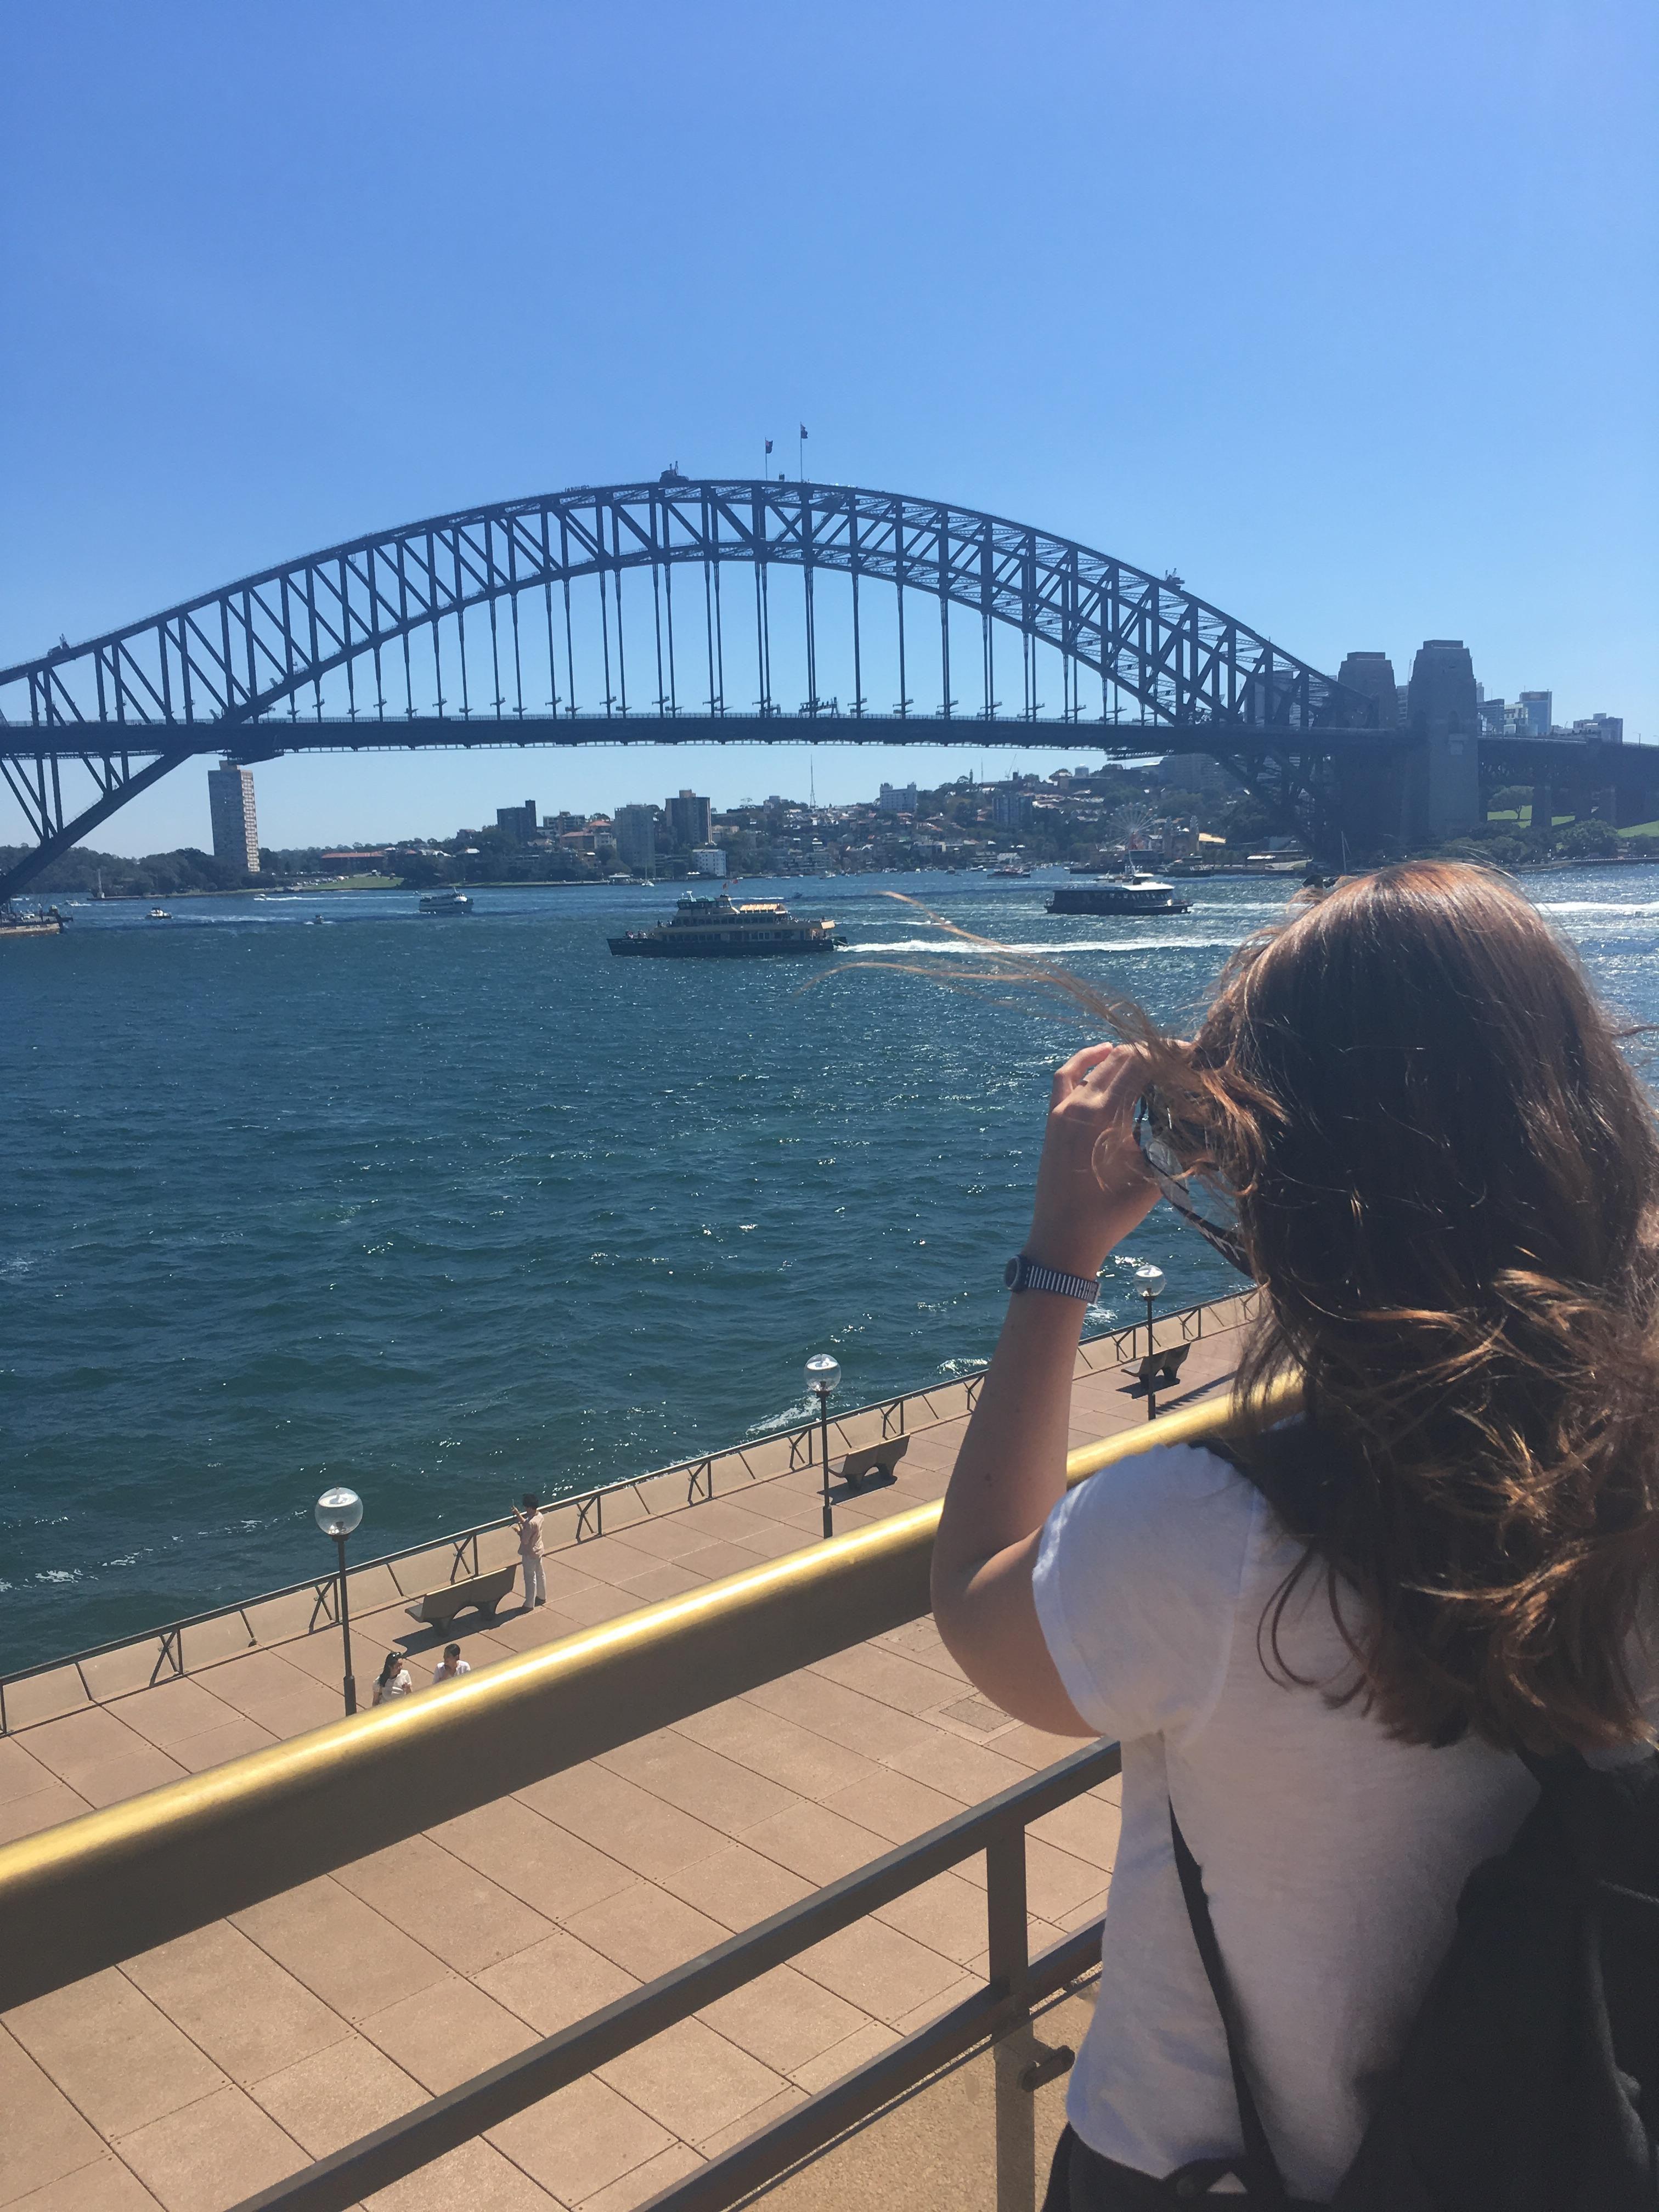 Sonntagsausflug zur Sydney Harbour Bridge #australia #travel #roadtrip #backpacking 🇦🇺